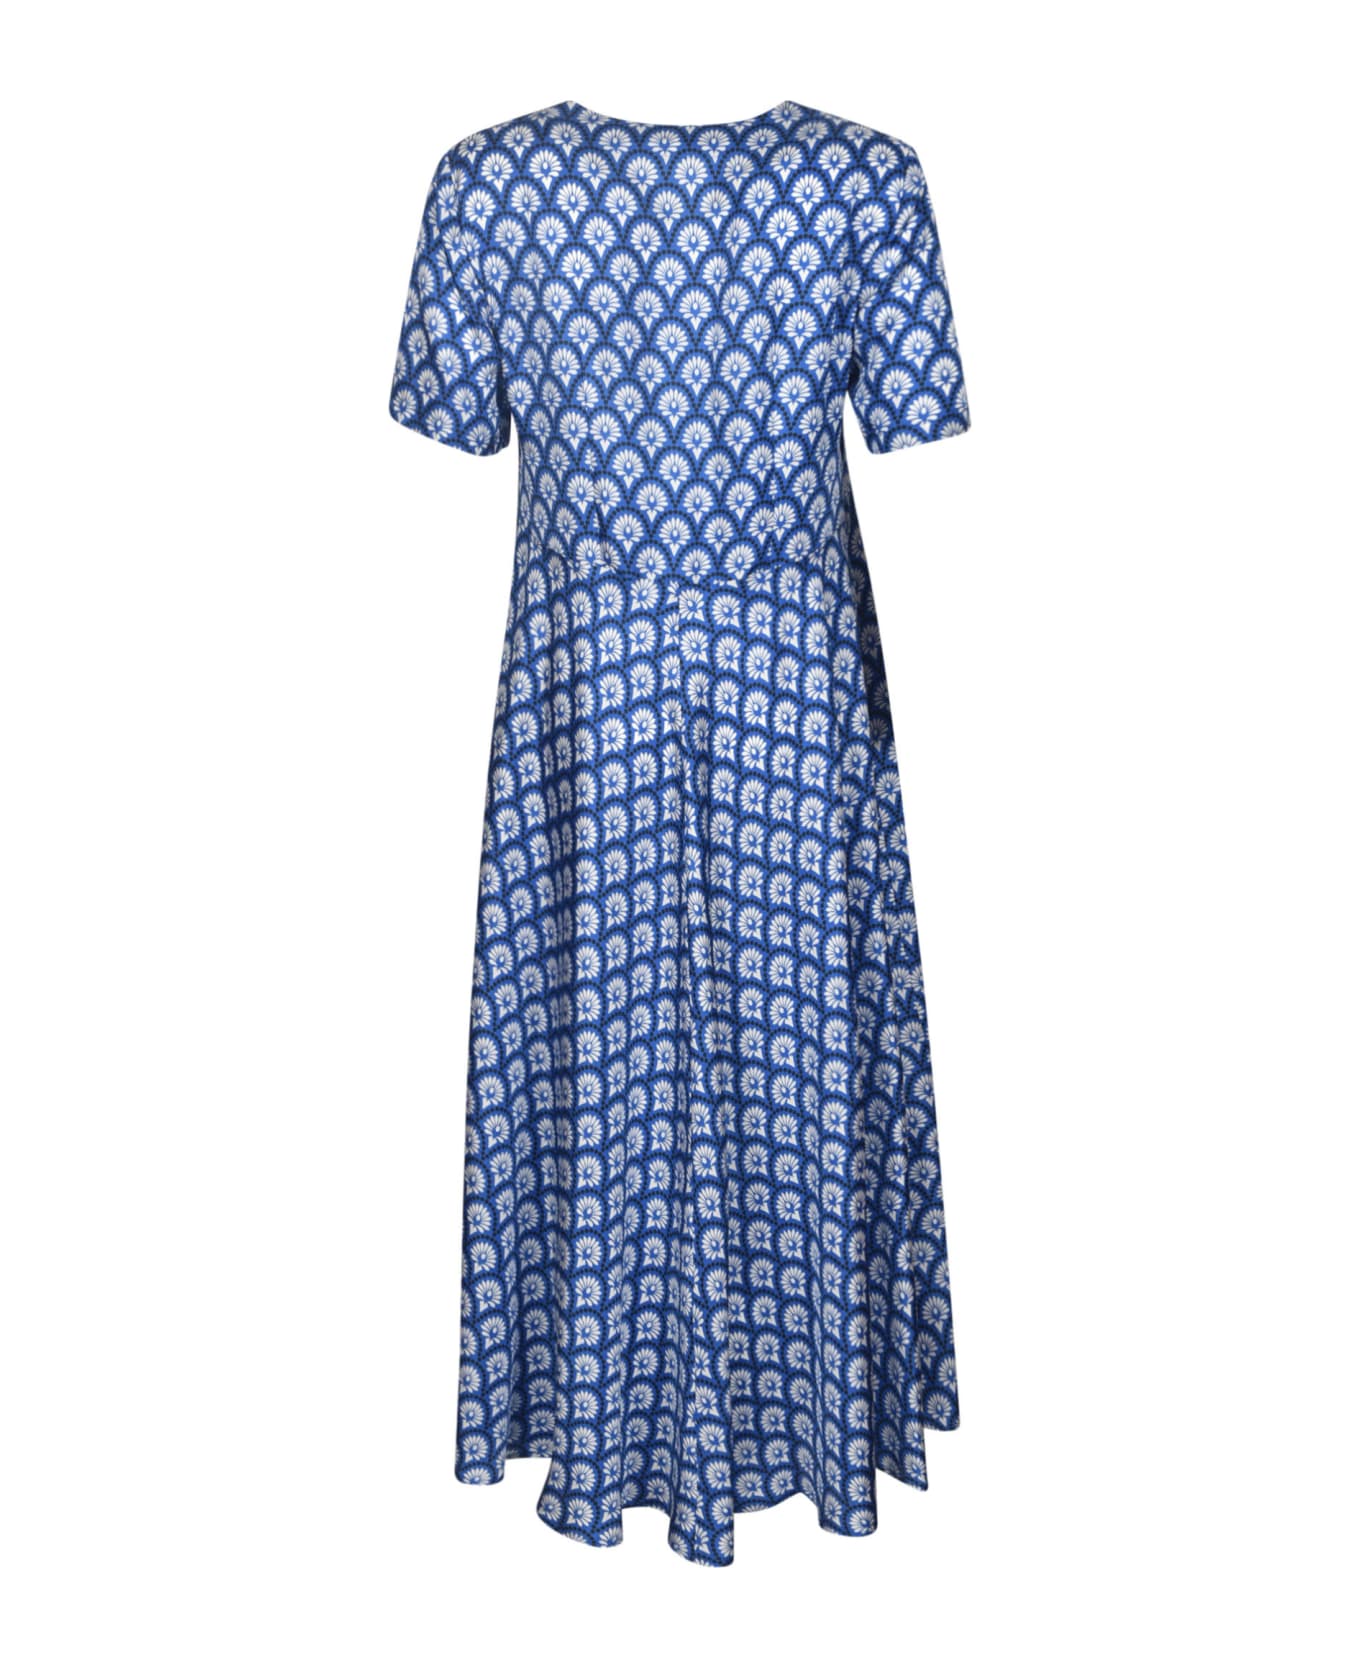 Parosh Monogram Printed Dress - Blue/White